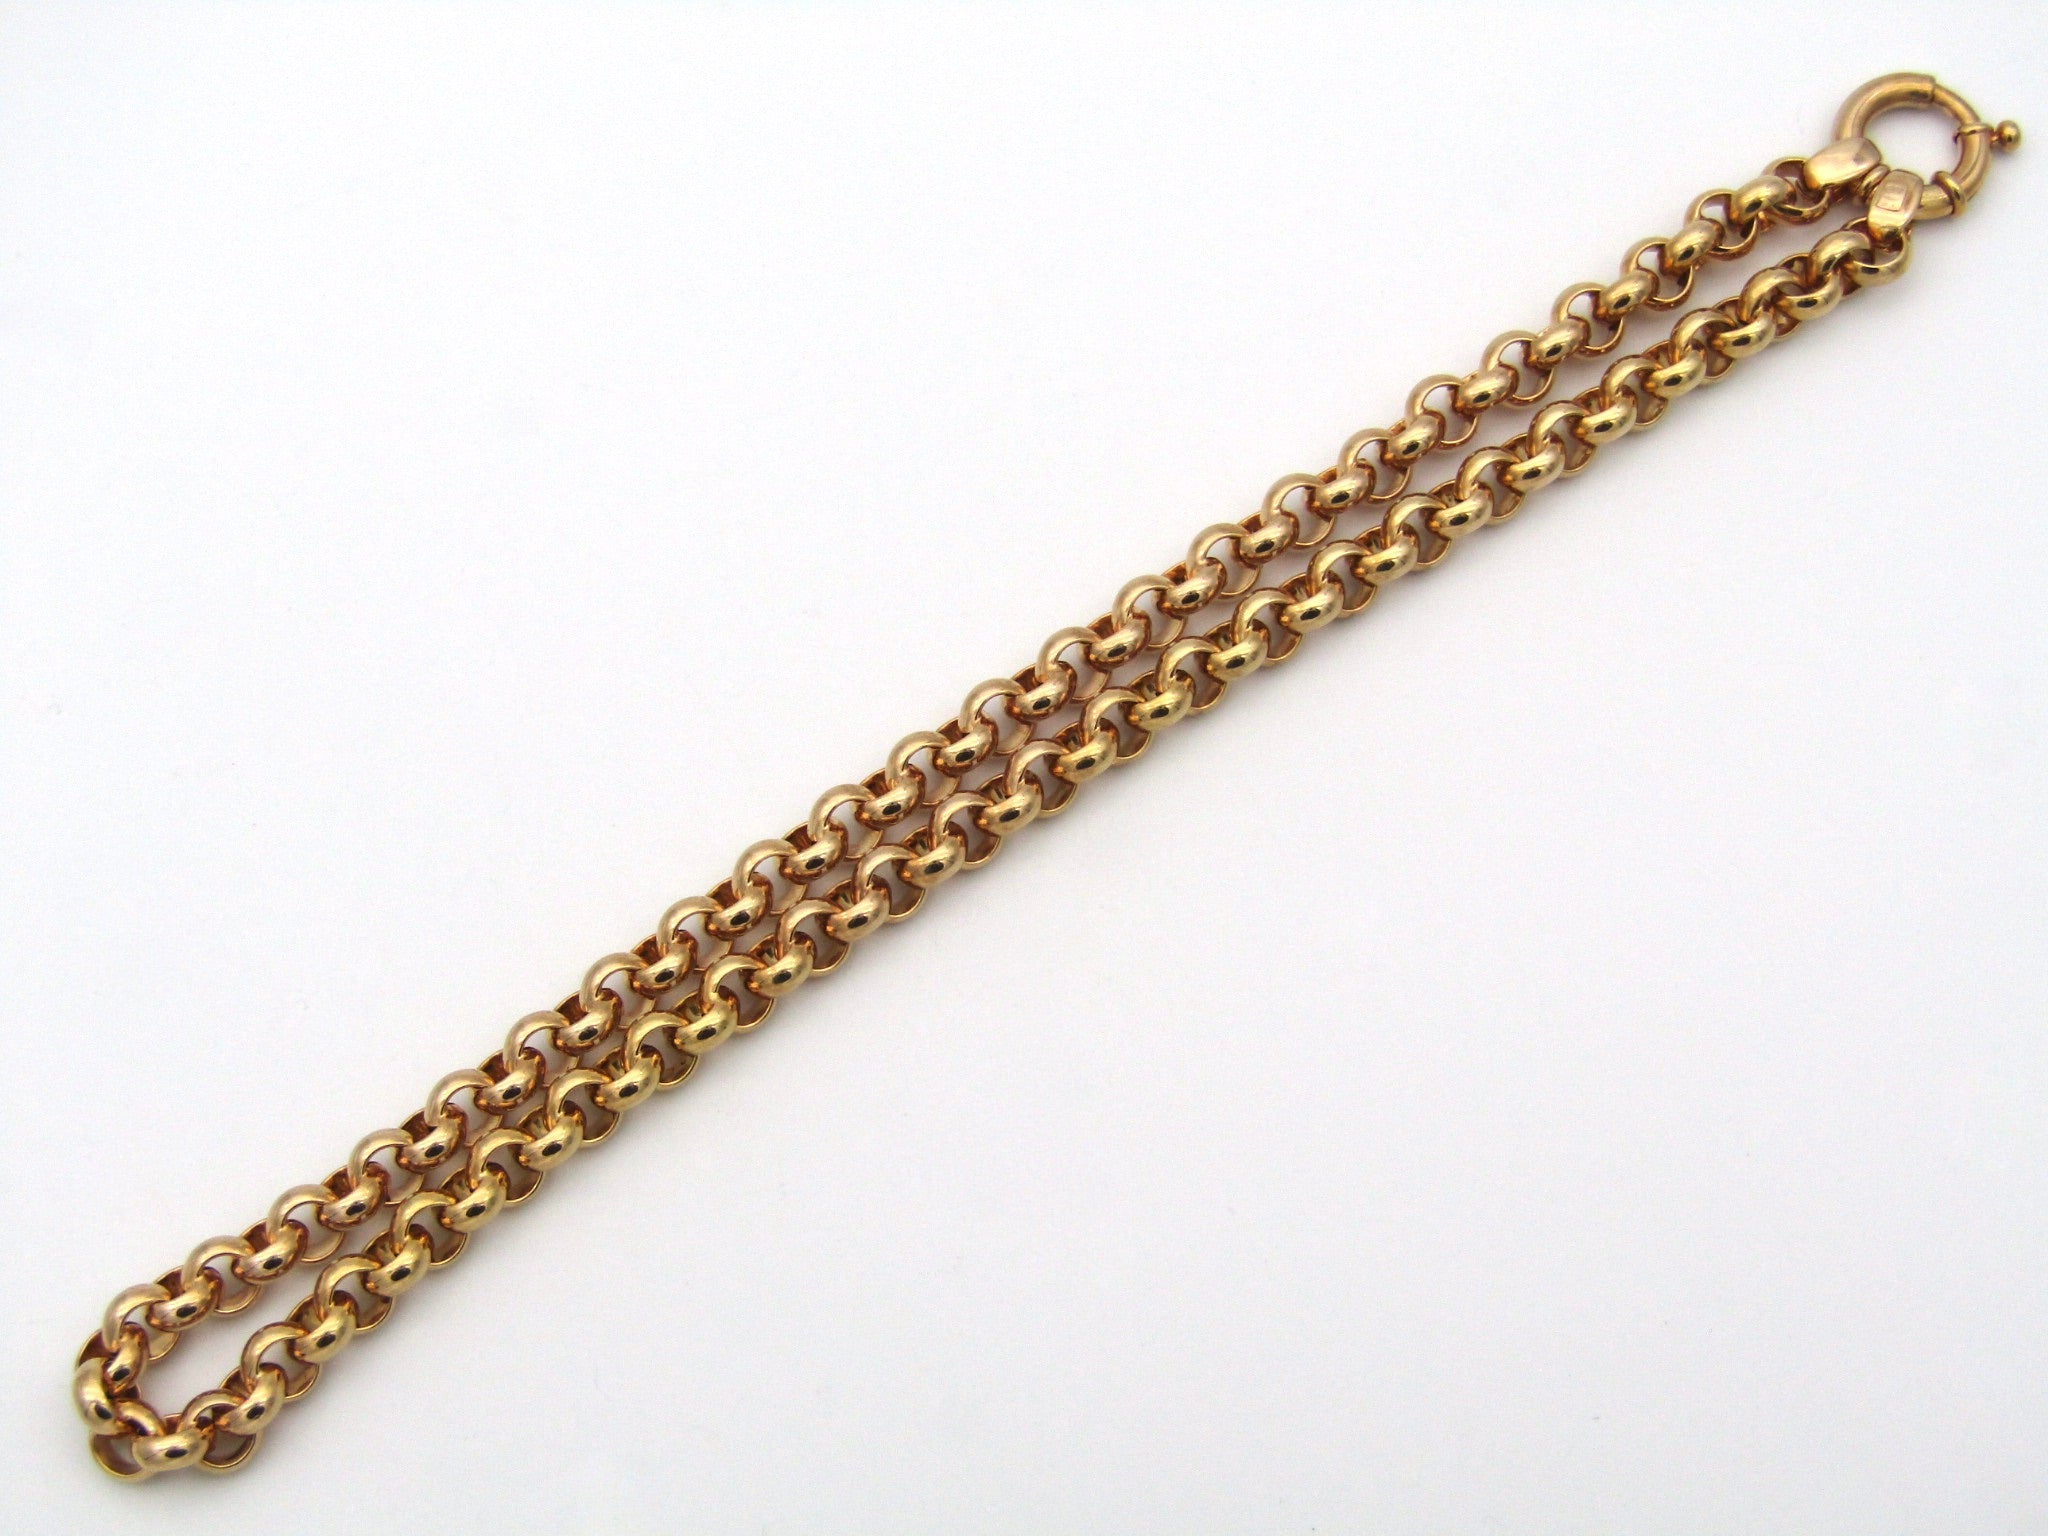 9K gold belcher/rolo link necklace by UnoAerre.